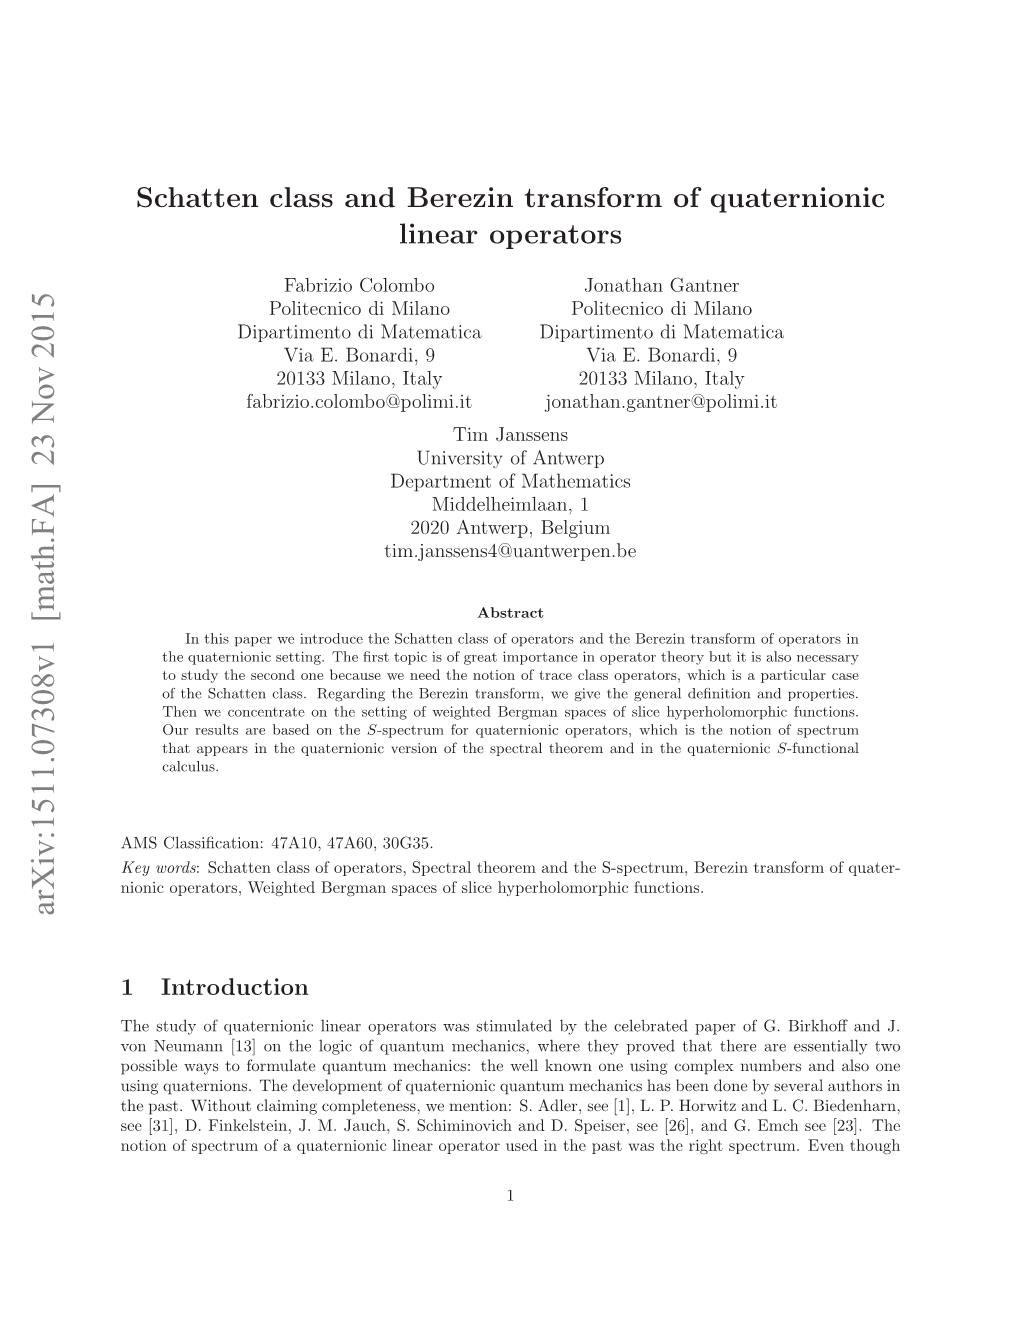 Schatten Class and Berezin Transform of Quaternionic Linear Operators